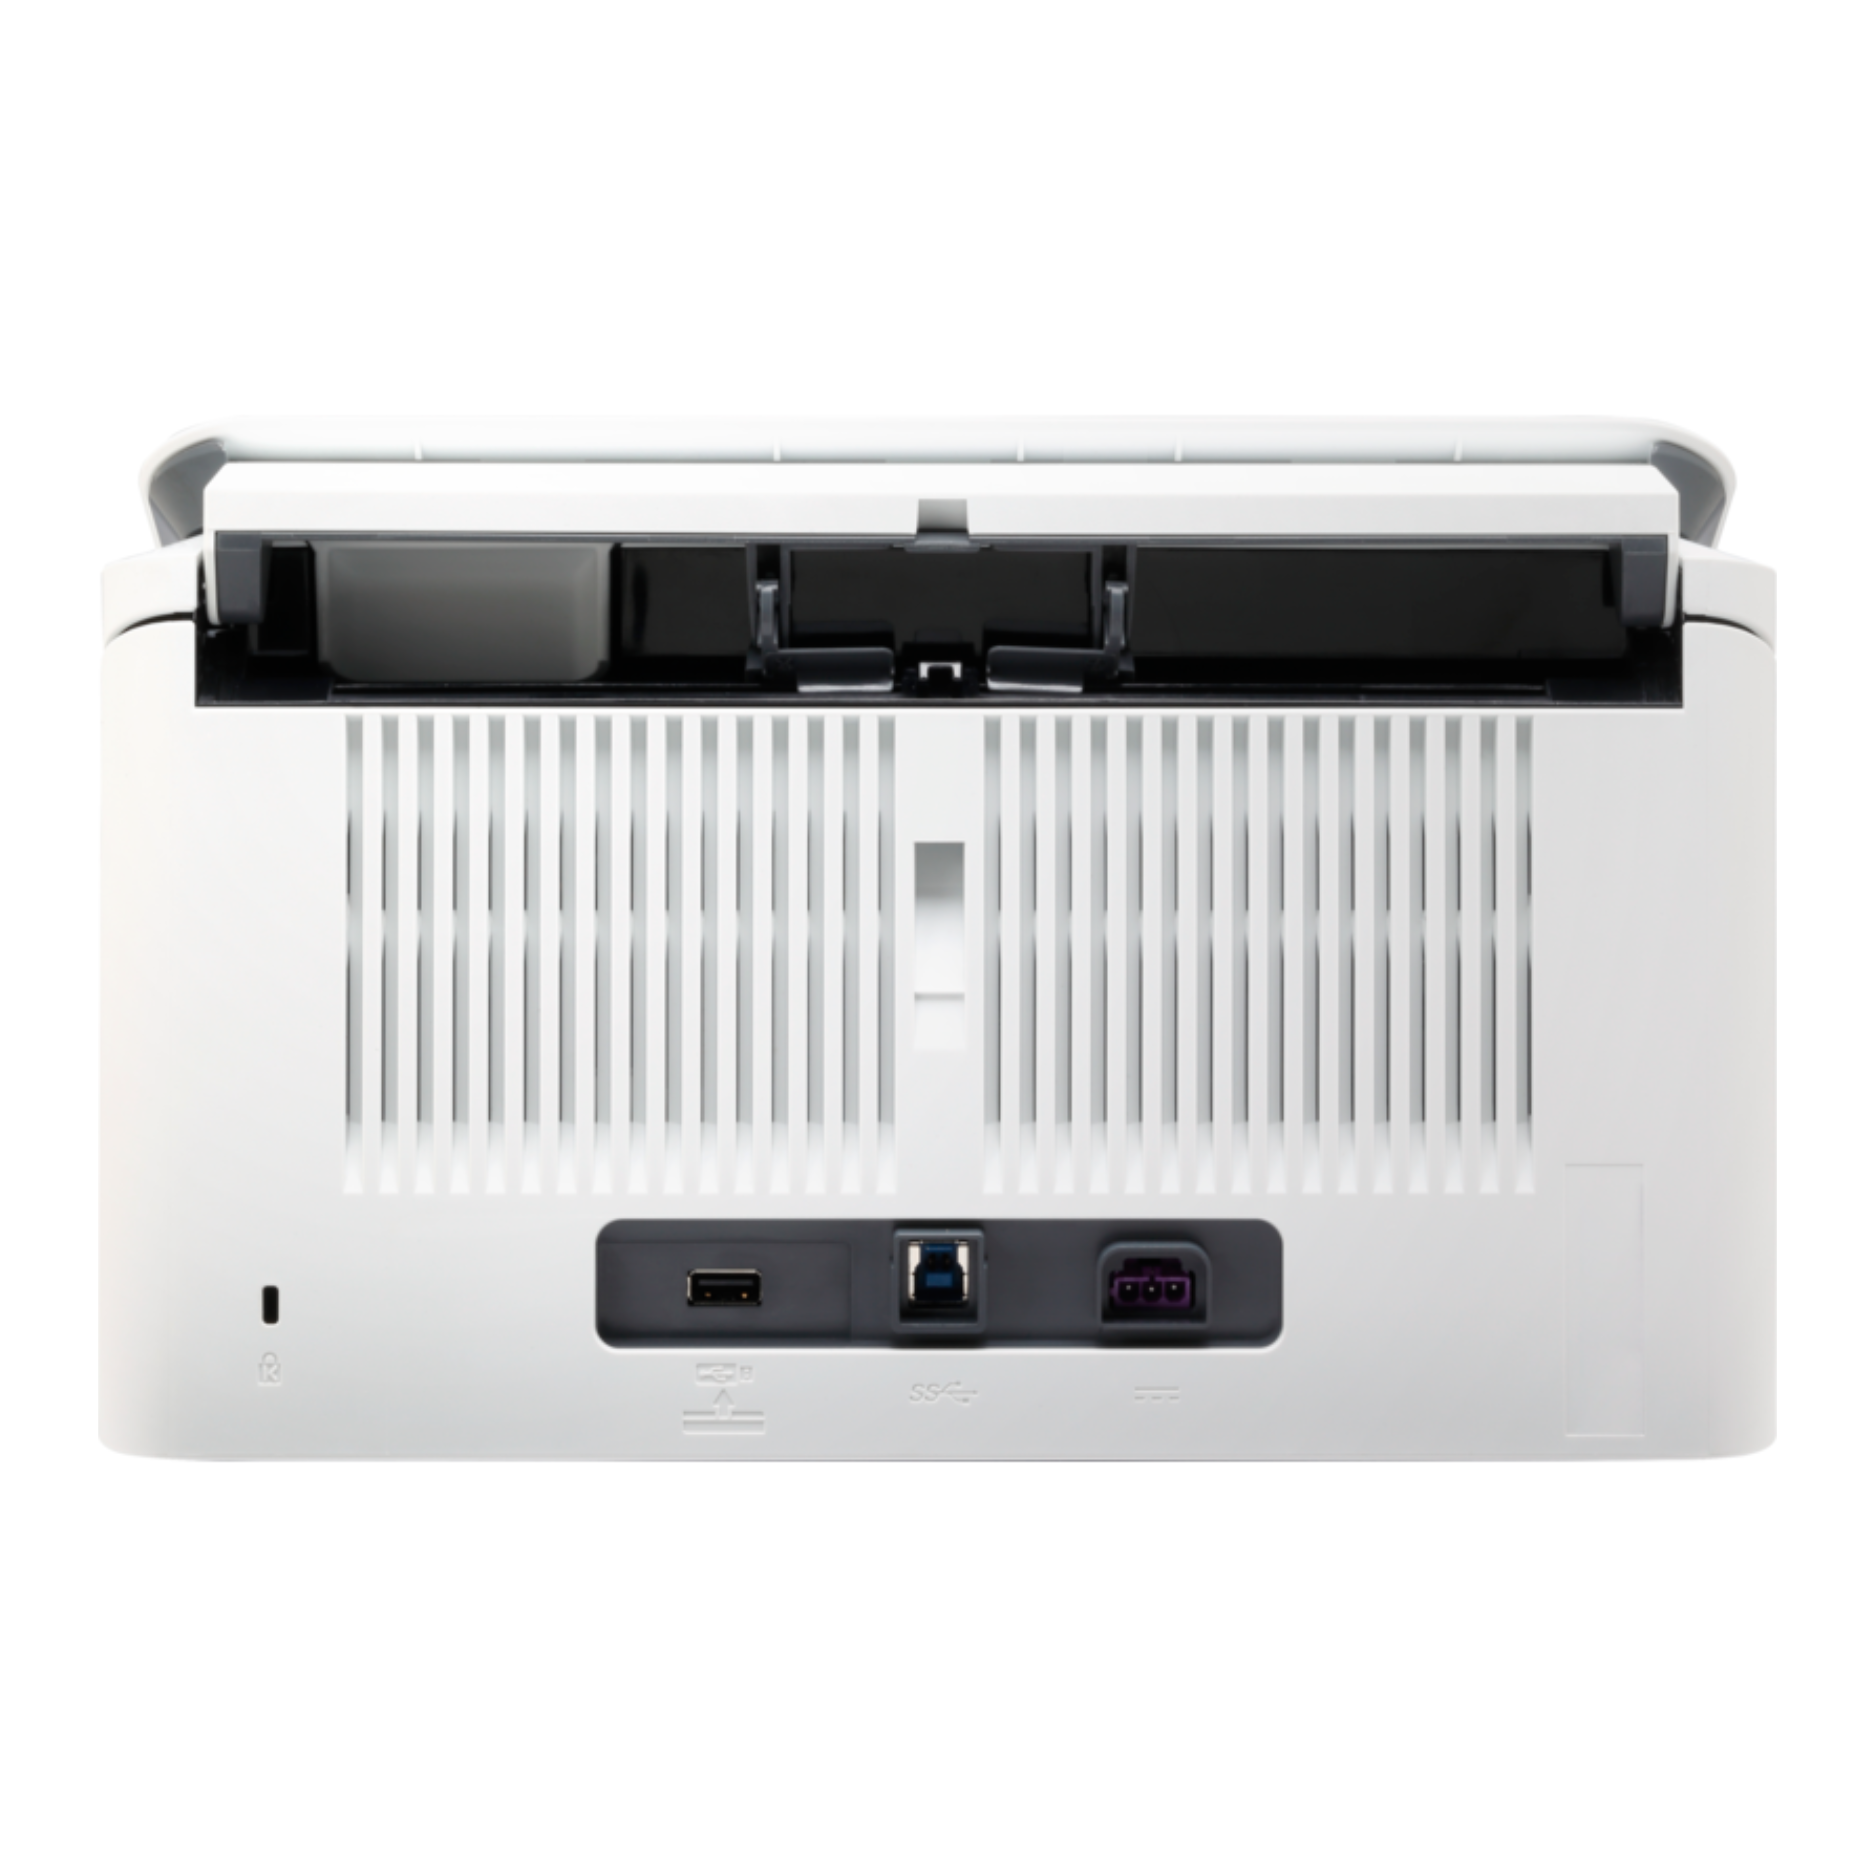 Escaner HP ScanJet Enterprise Flow 5000 s5 (6FW09A)